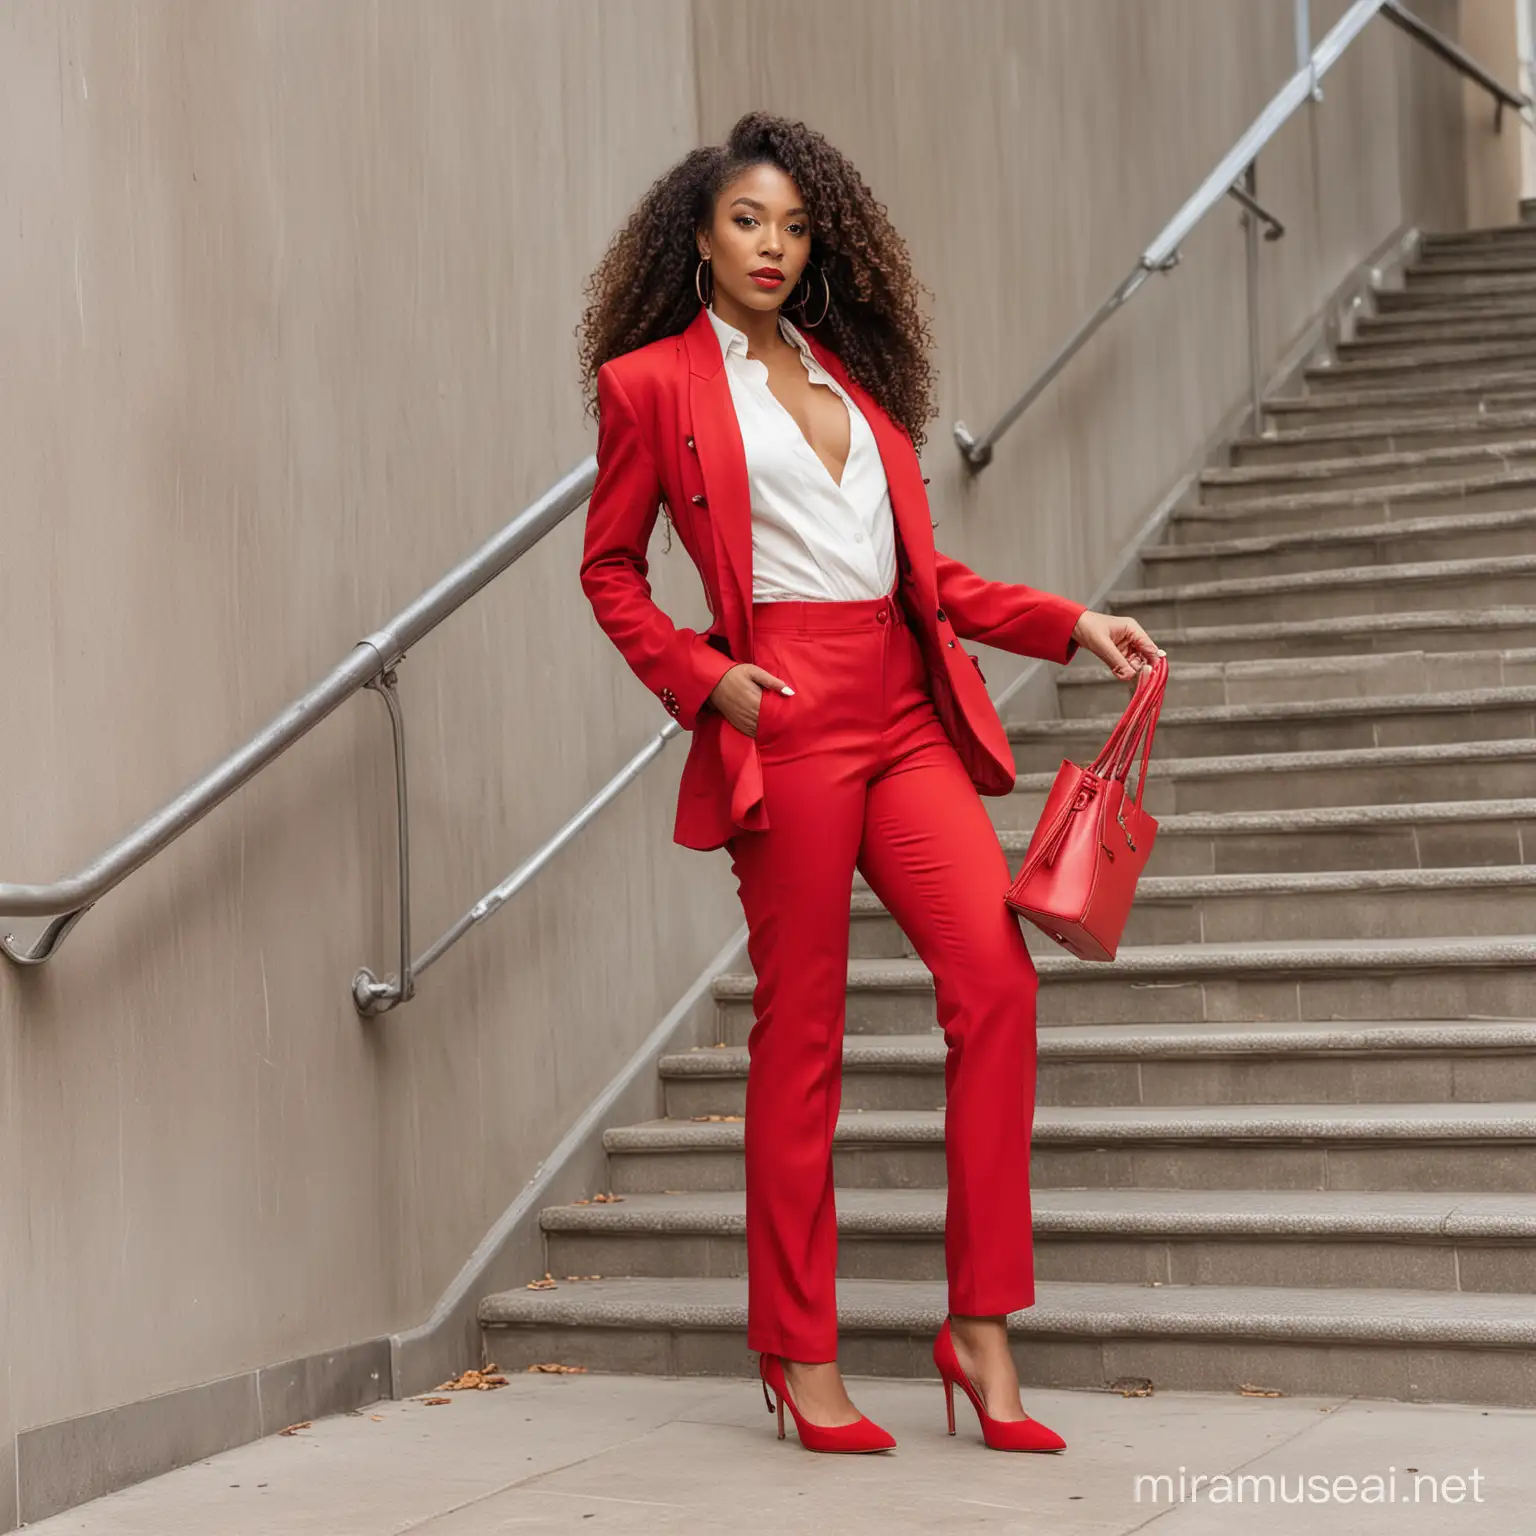 Elegant Black Woman in Red Pant Suit Climbing Stairs with Designer Handbag